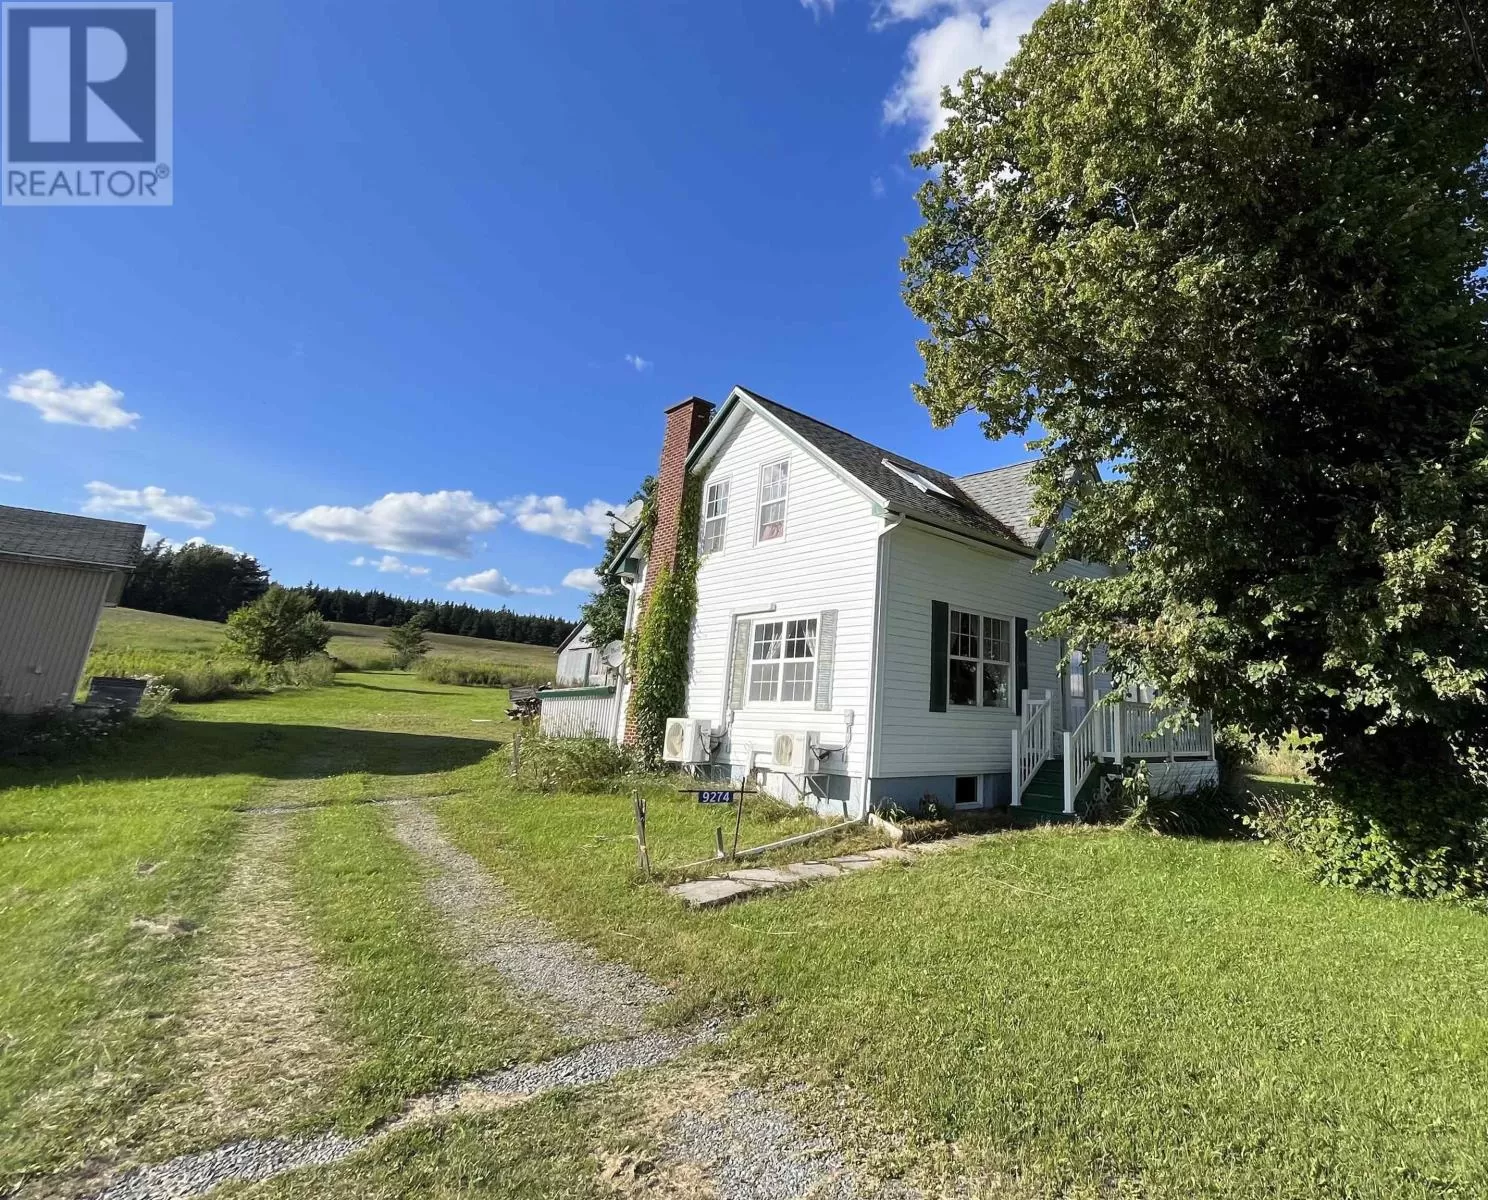 House for rent: 9274 Highway 224, Greenwood, Nova Scotia B0N 1X0